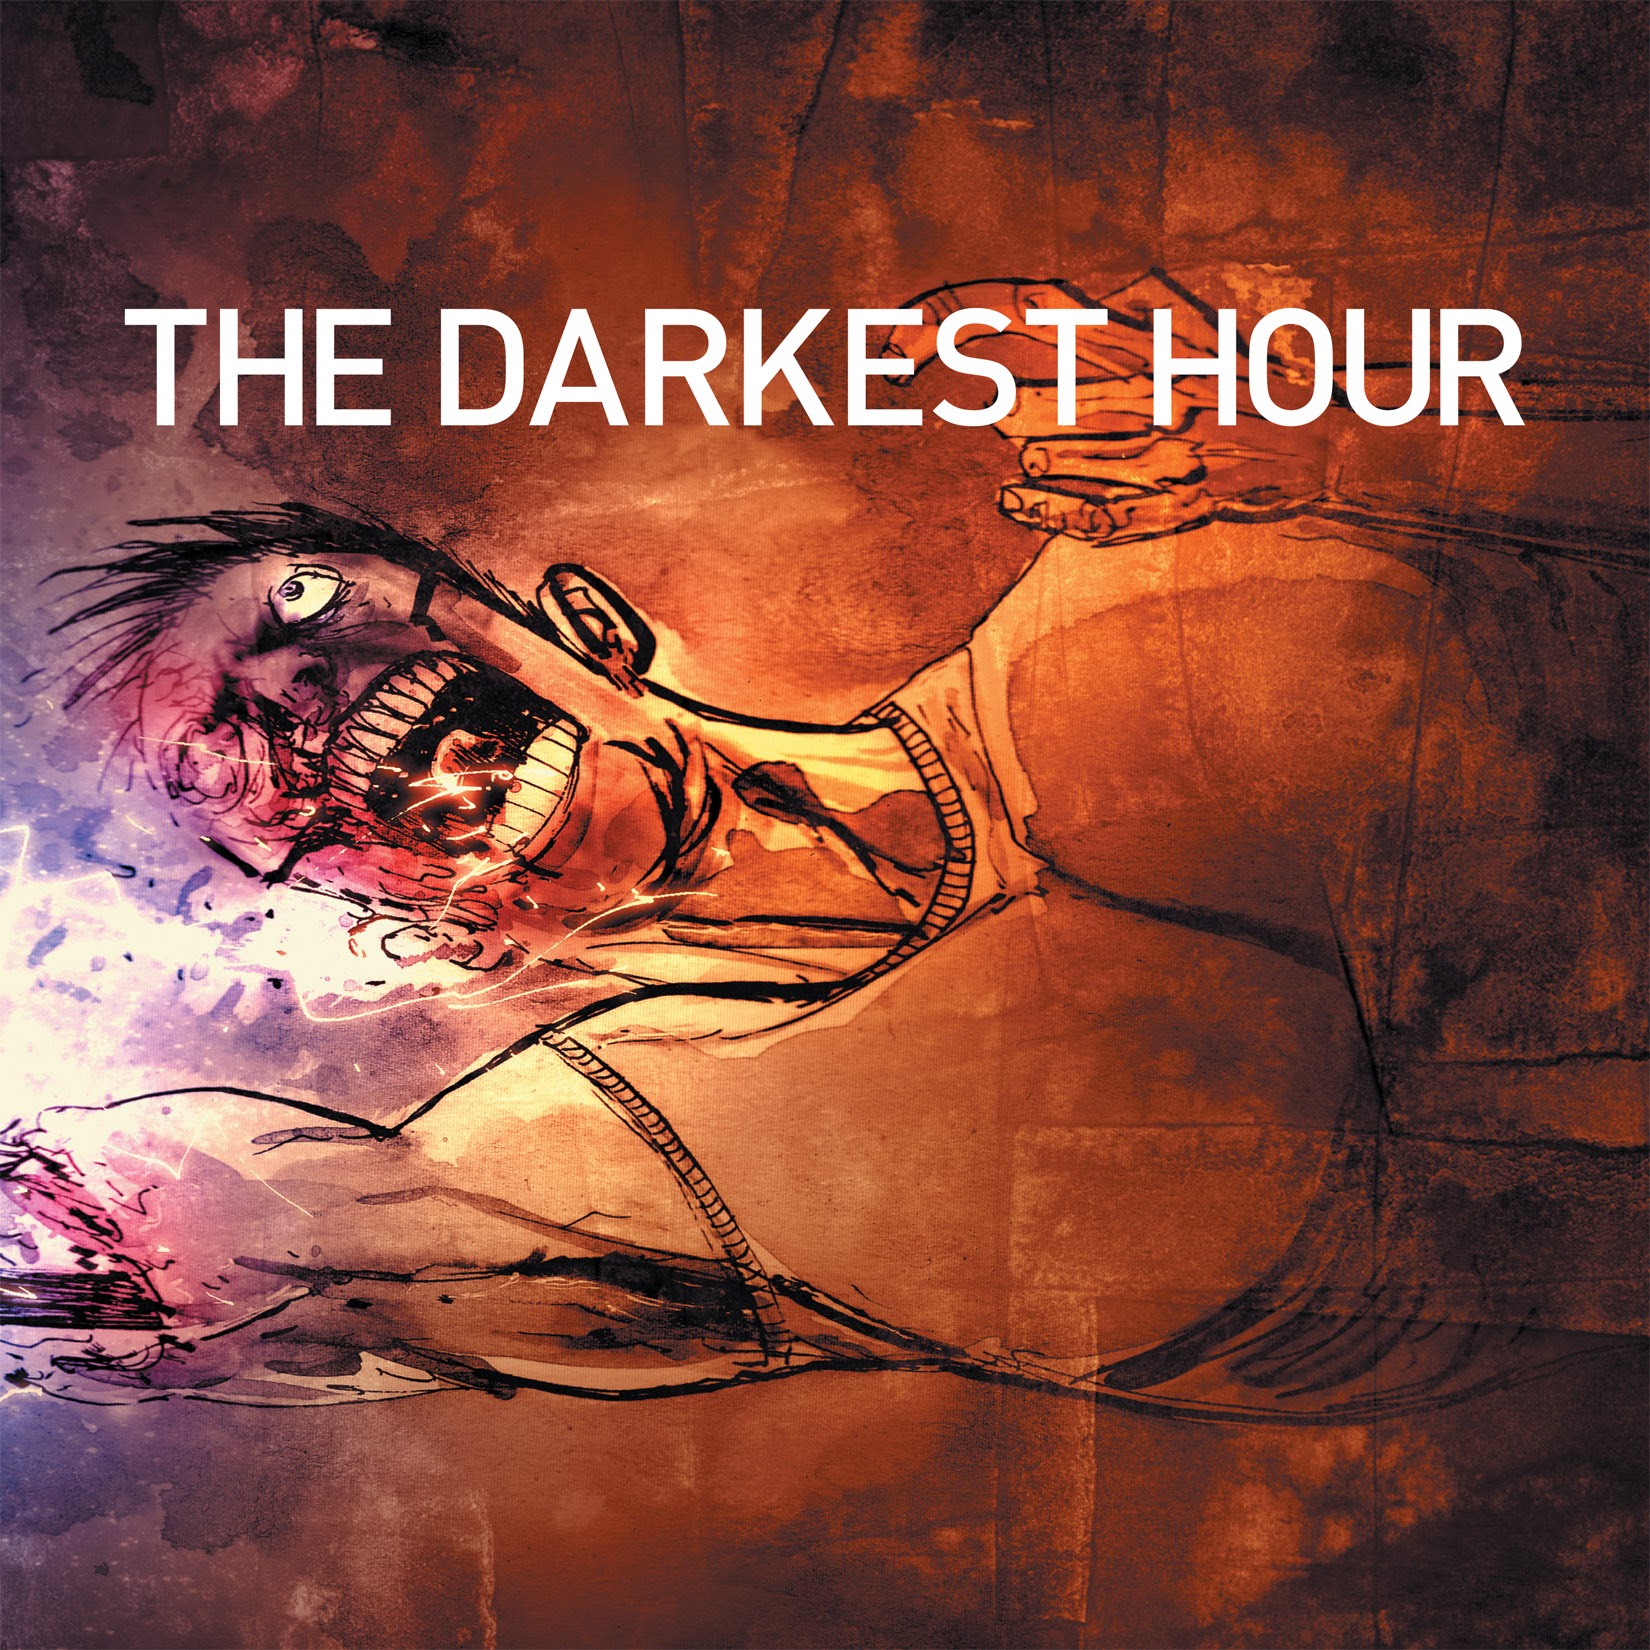 Read online The Darkest Hour comic -  Issue # Full - 1